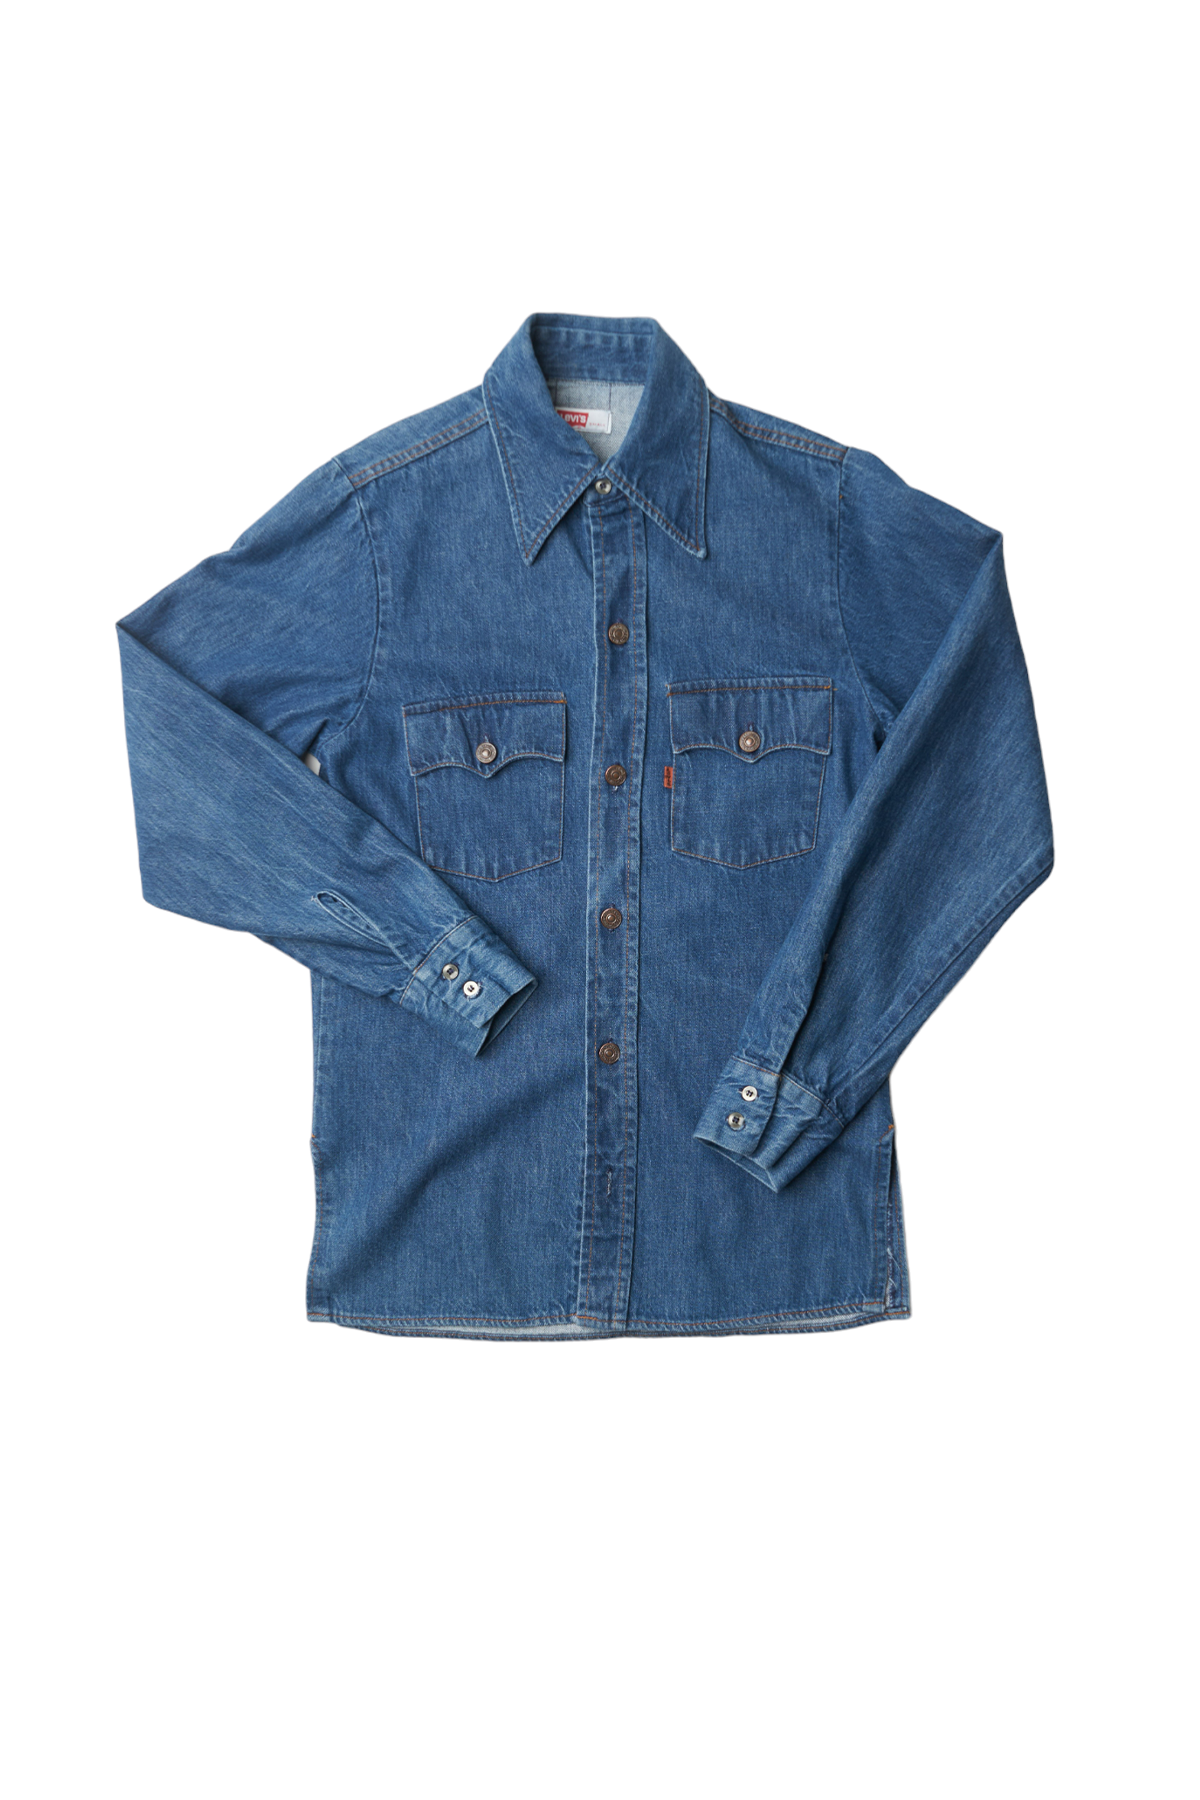 Vintage Jacket | Levis Denim Shirt Jacket